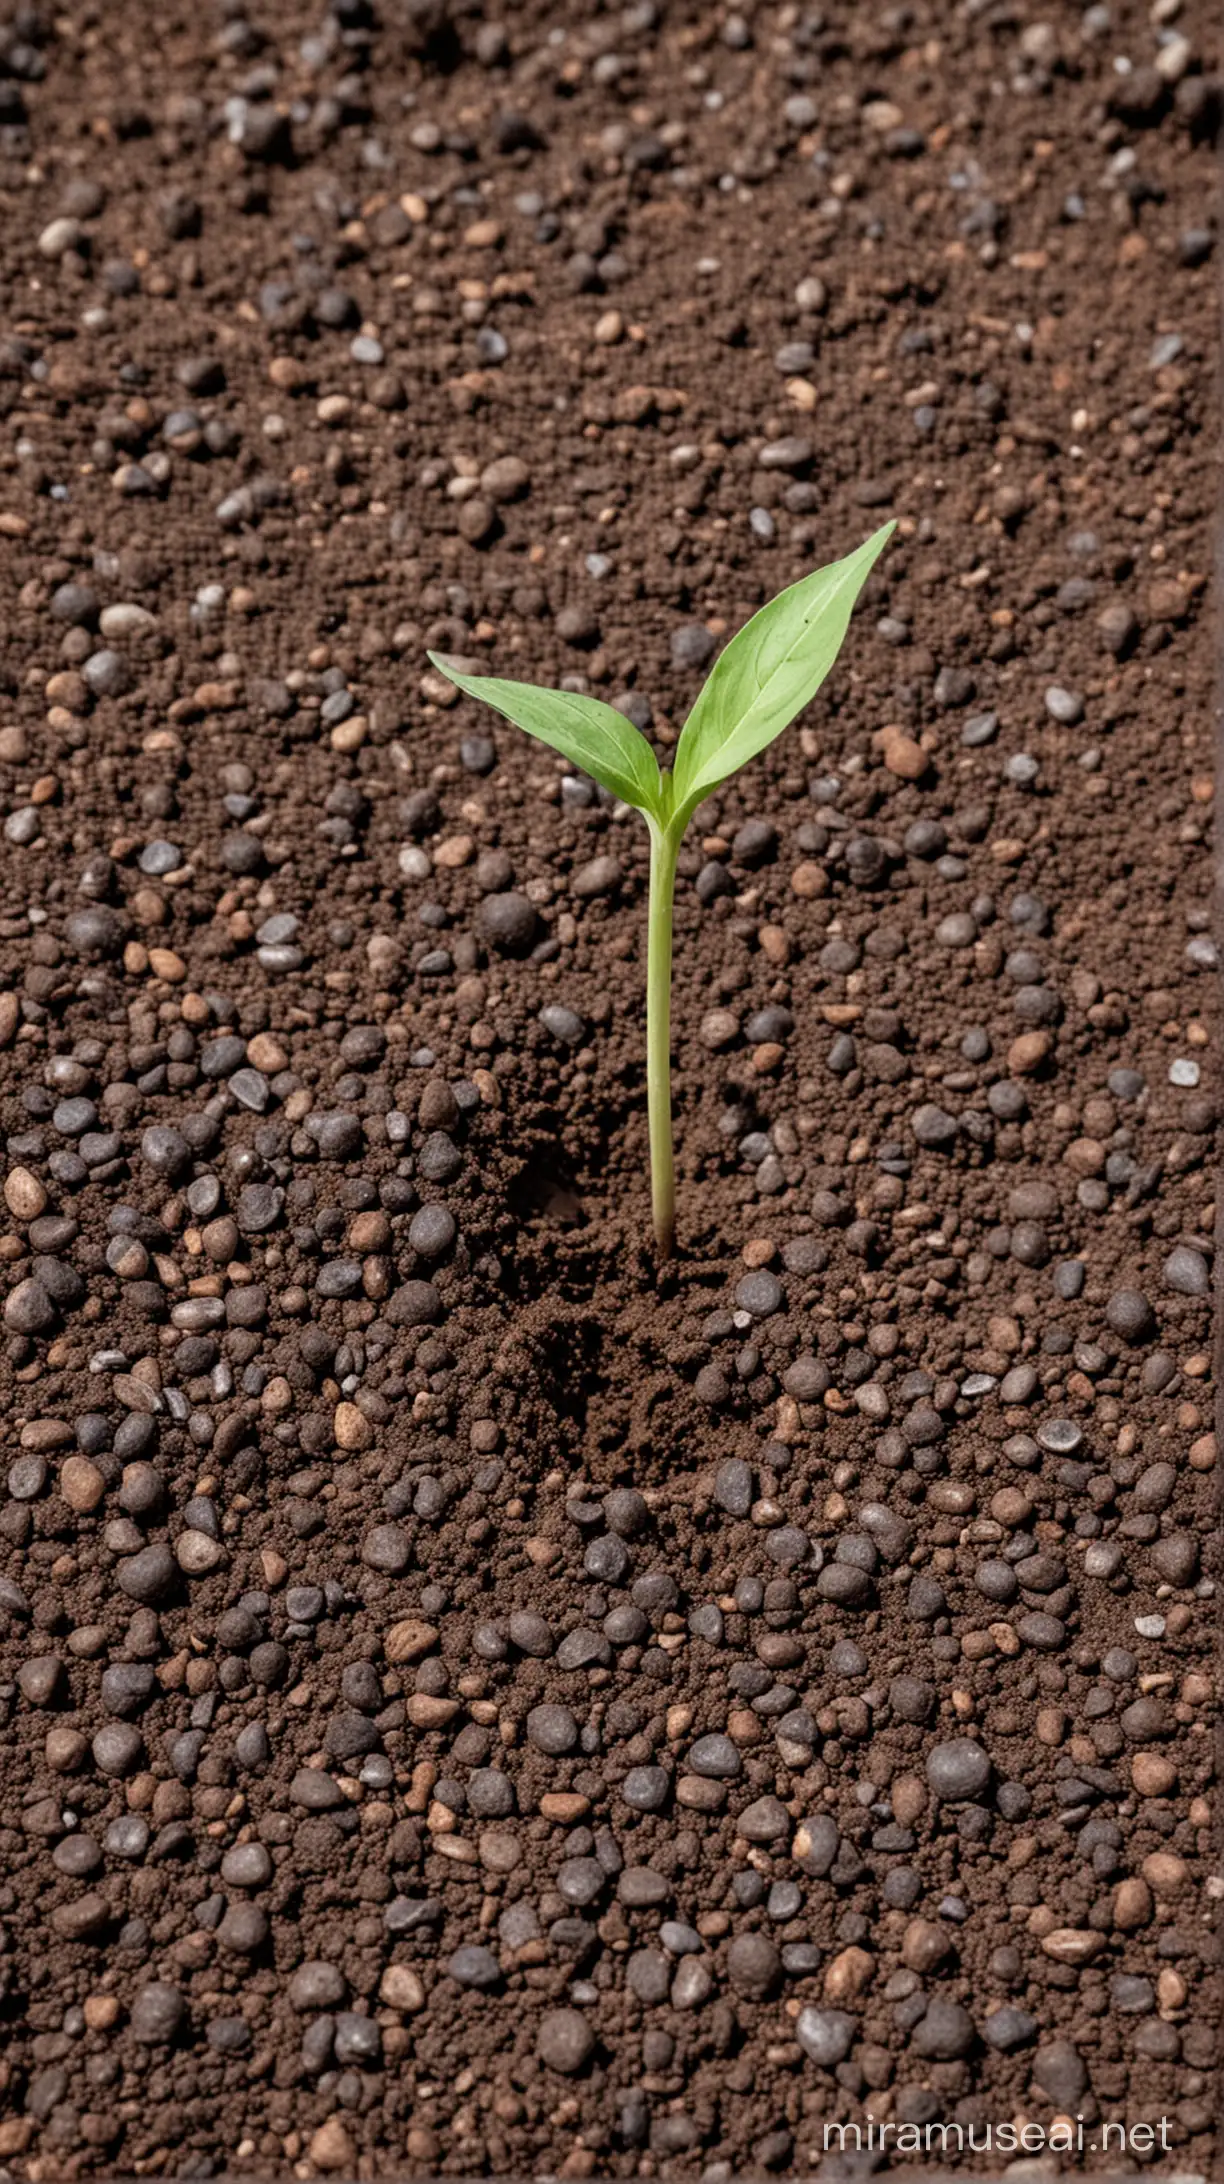 A single seed nestled in soil.